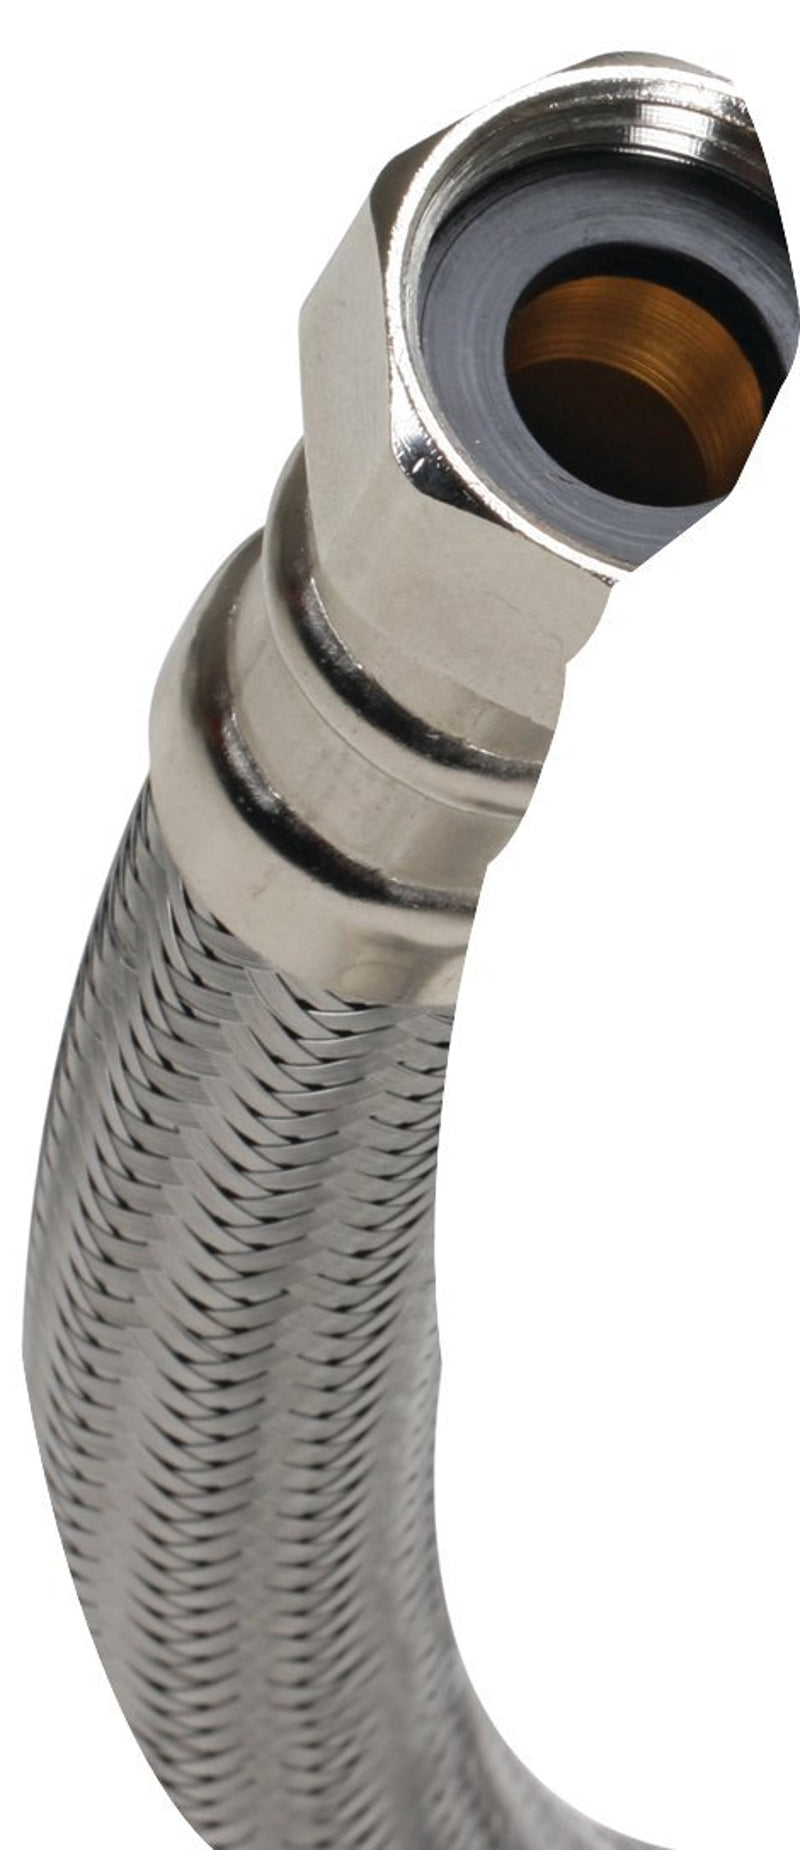 FLUIDMASTER Fluidmaster B1H12 High-Flexible Water Heater Connector, 3/4 in, FIP, Stainless Steel, Nickel, 12 in L PLUMBING, HEATING & VENTILATION FLUIDMASTER   